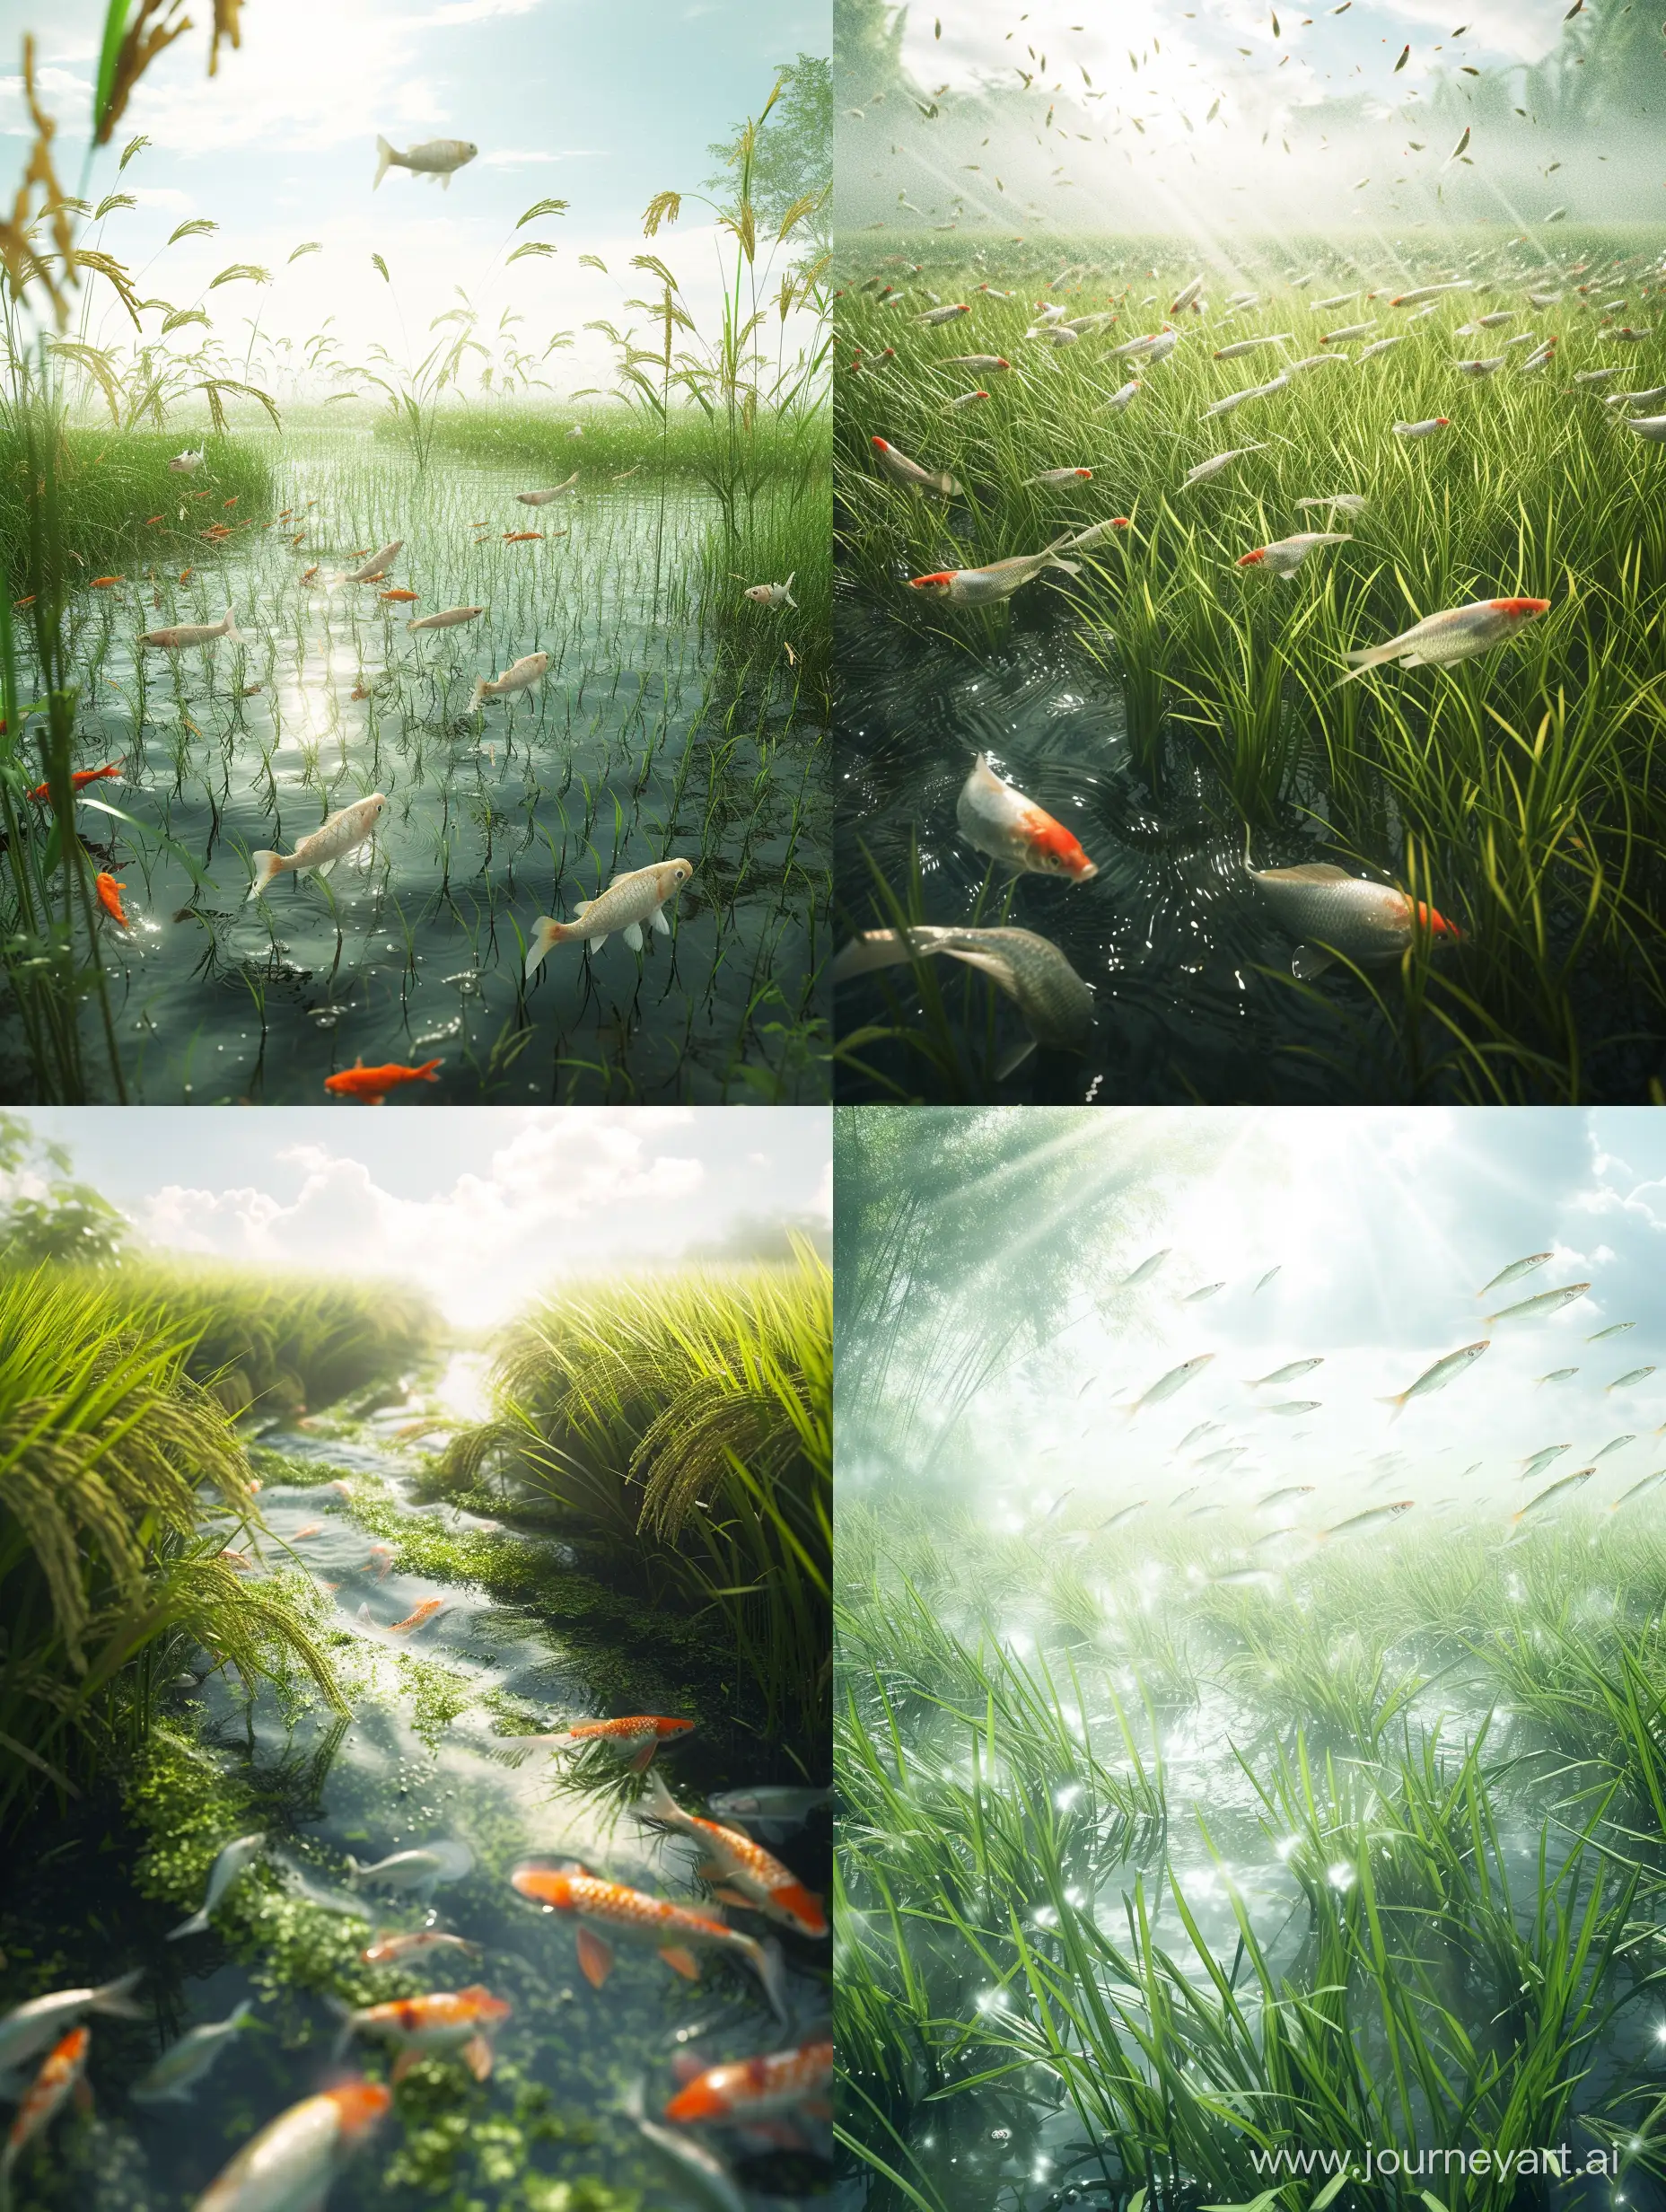 Serene-Harmony-Vibrant-Rice-Field-with-Joyful-Fish-in-Morning-Light